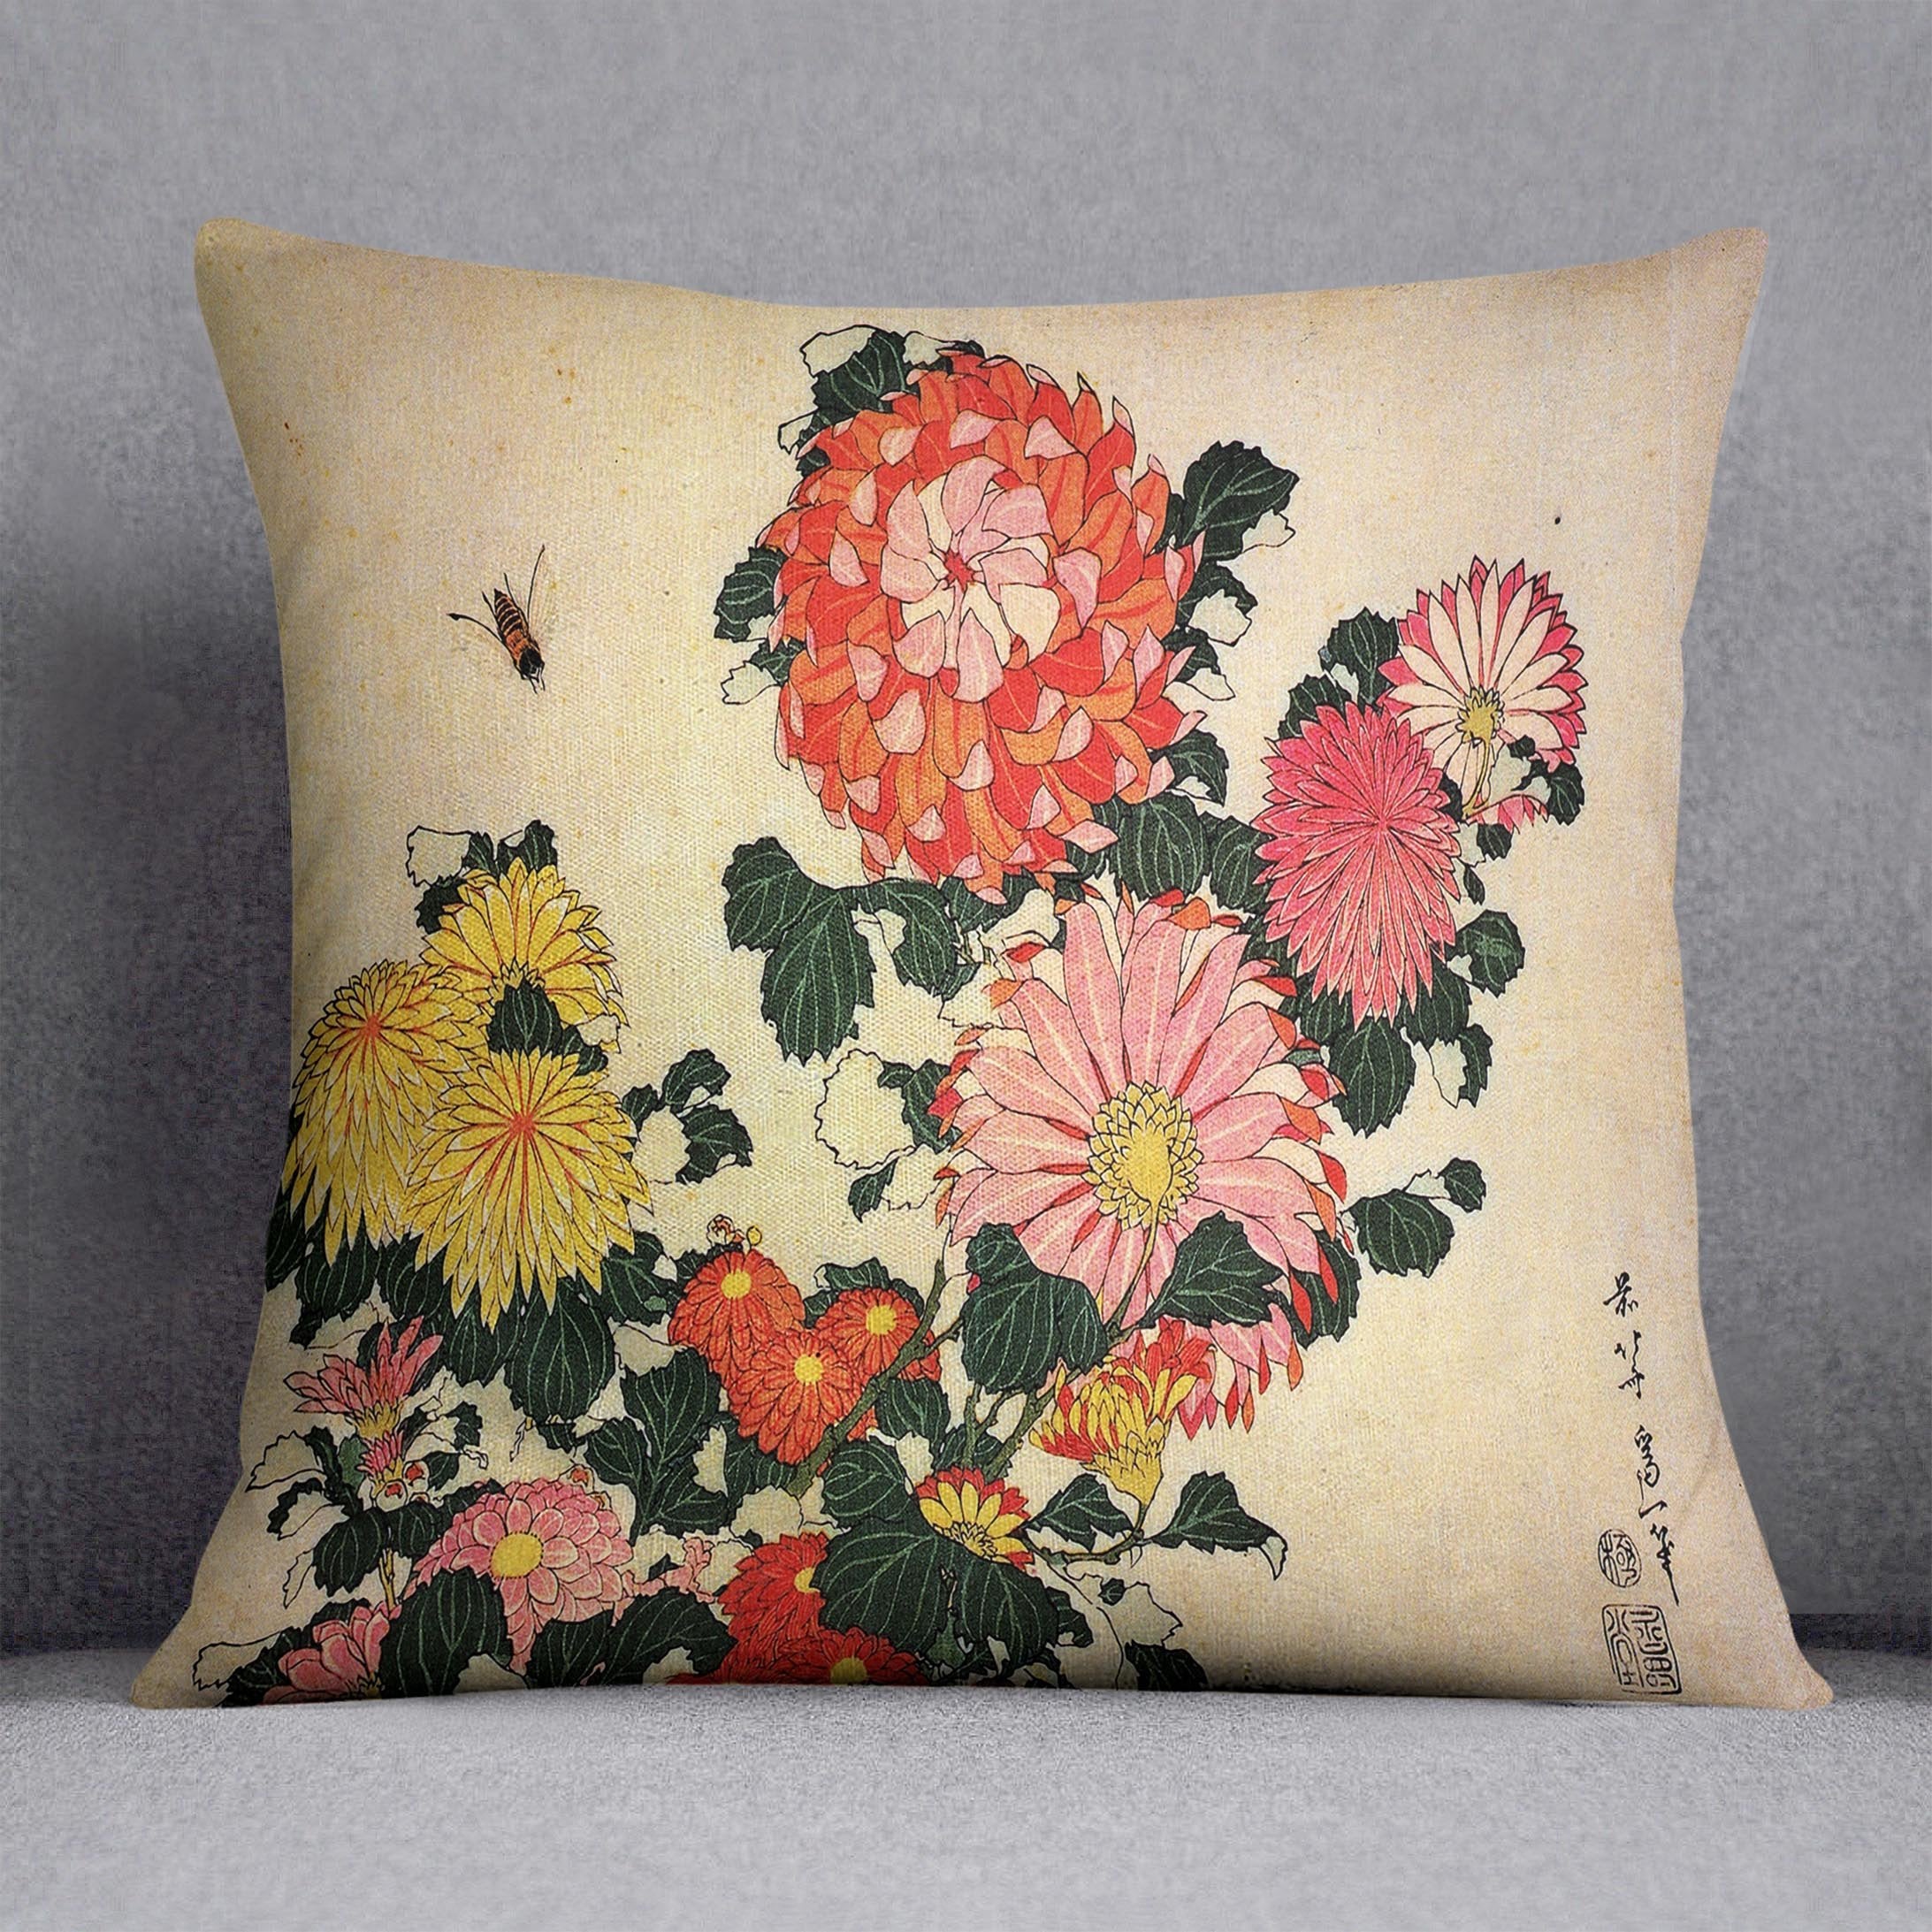 Chrysanthemum and bee by Hokusai Throw Pillow